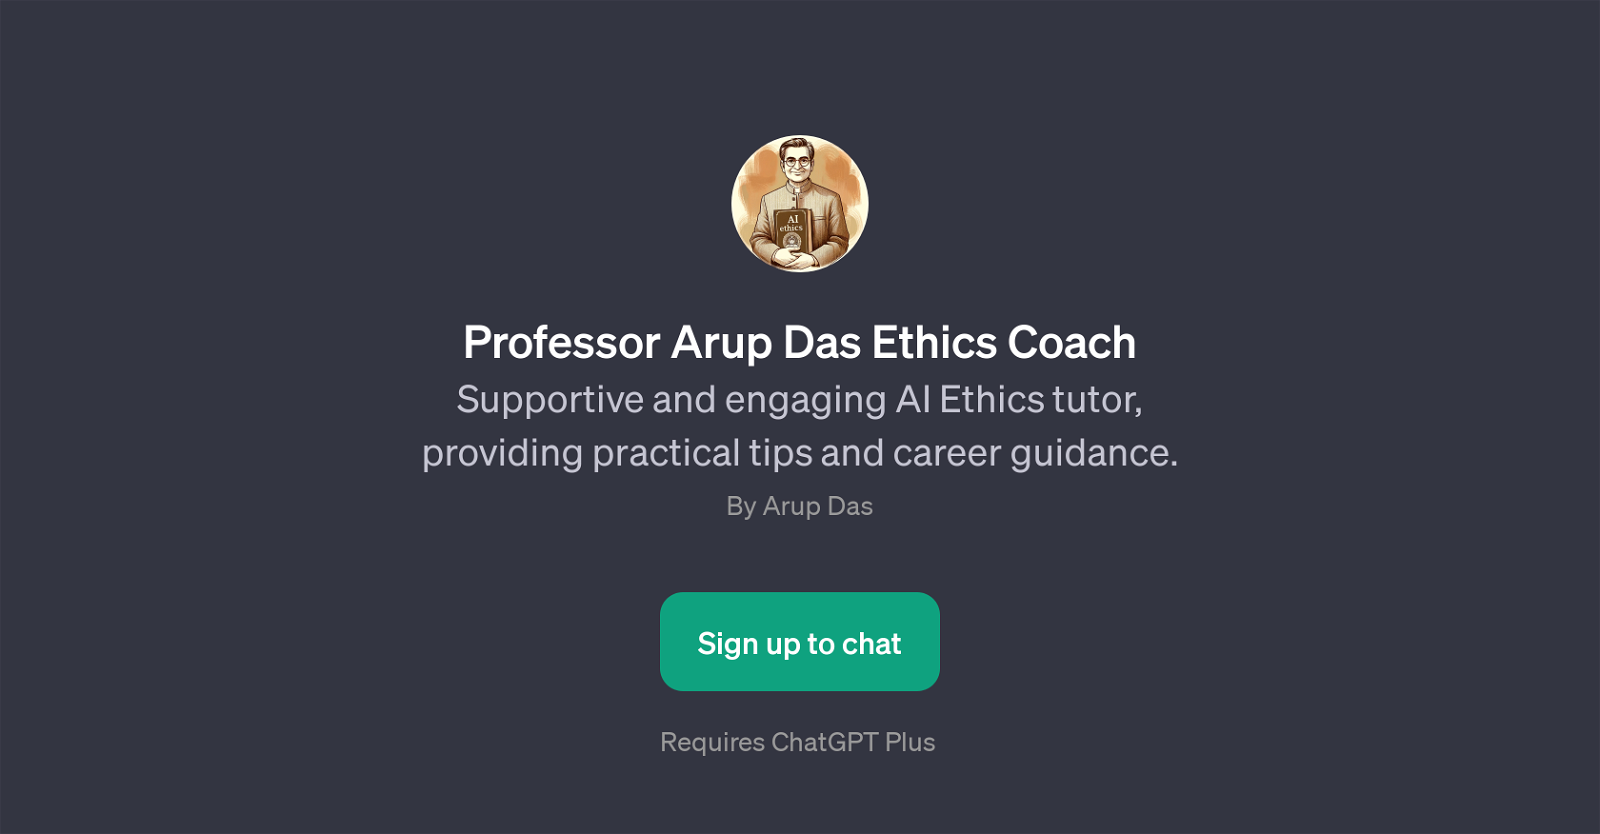 Professor Arup Das Ethics Coach website